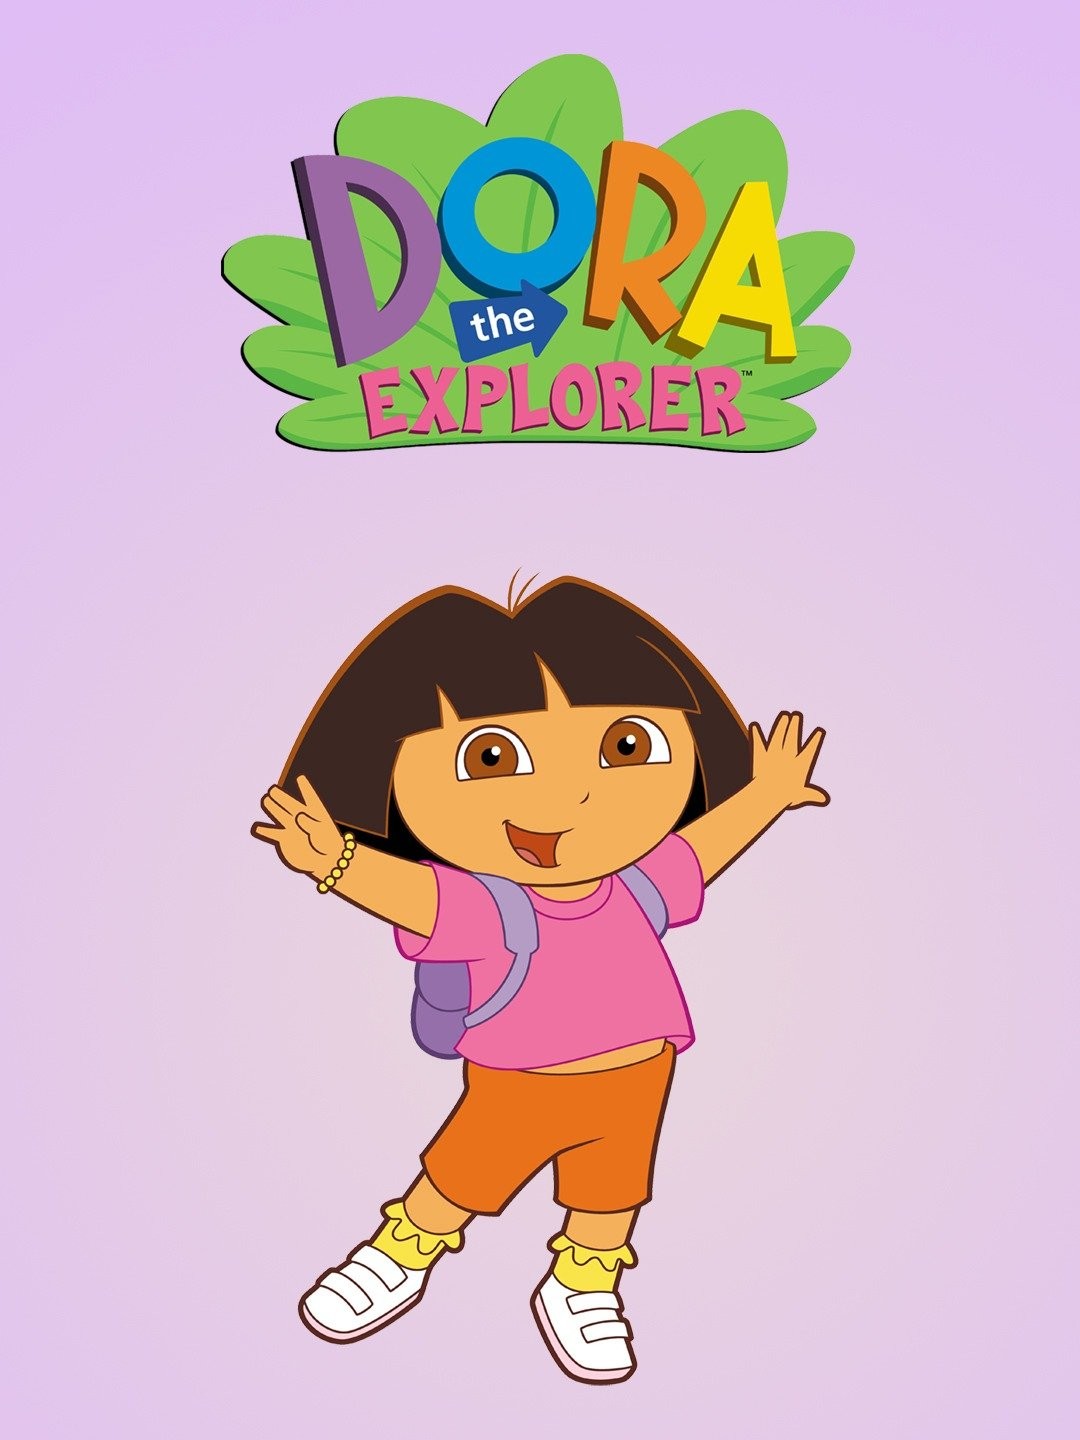 dora the explorer birthday wallpaper